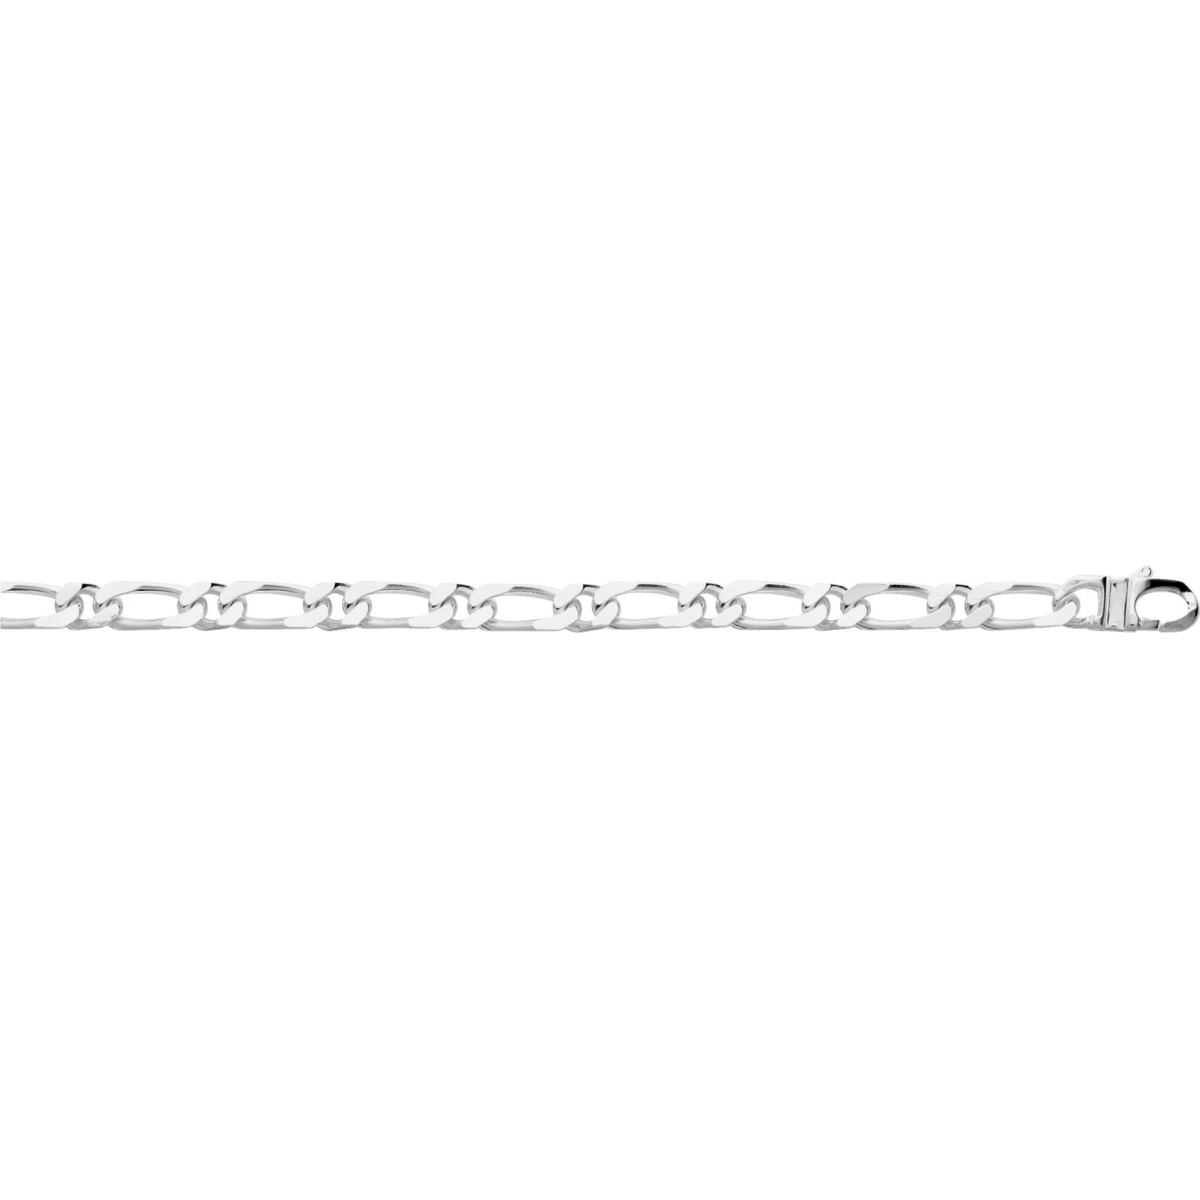 Necklace 6mm rh925 Silver - Size: 55  Lua Blanca  301268C.55